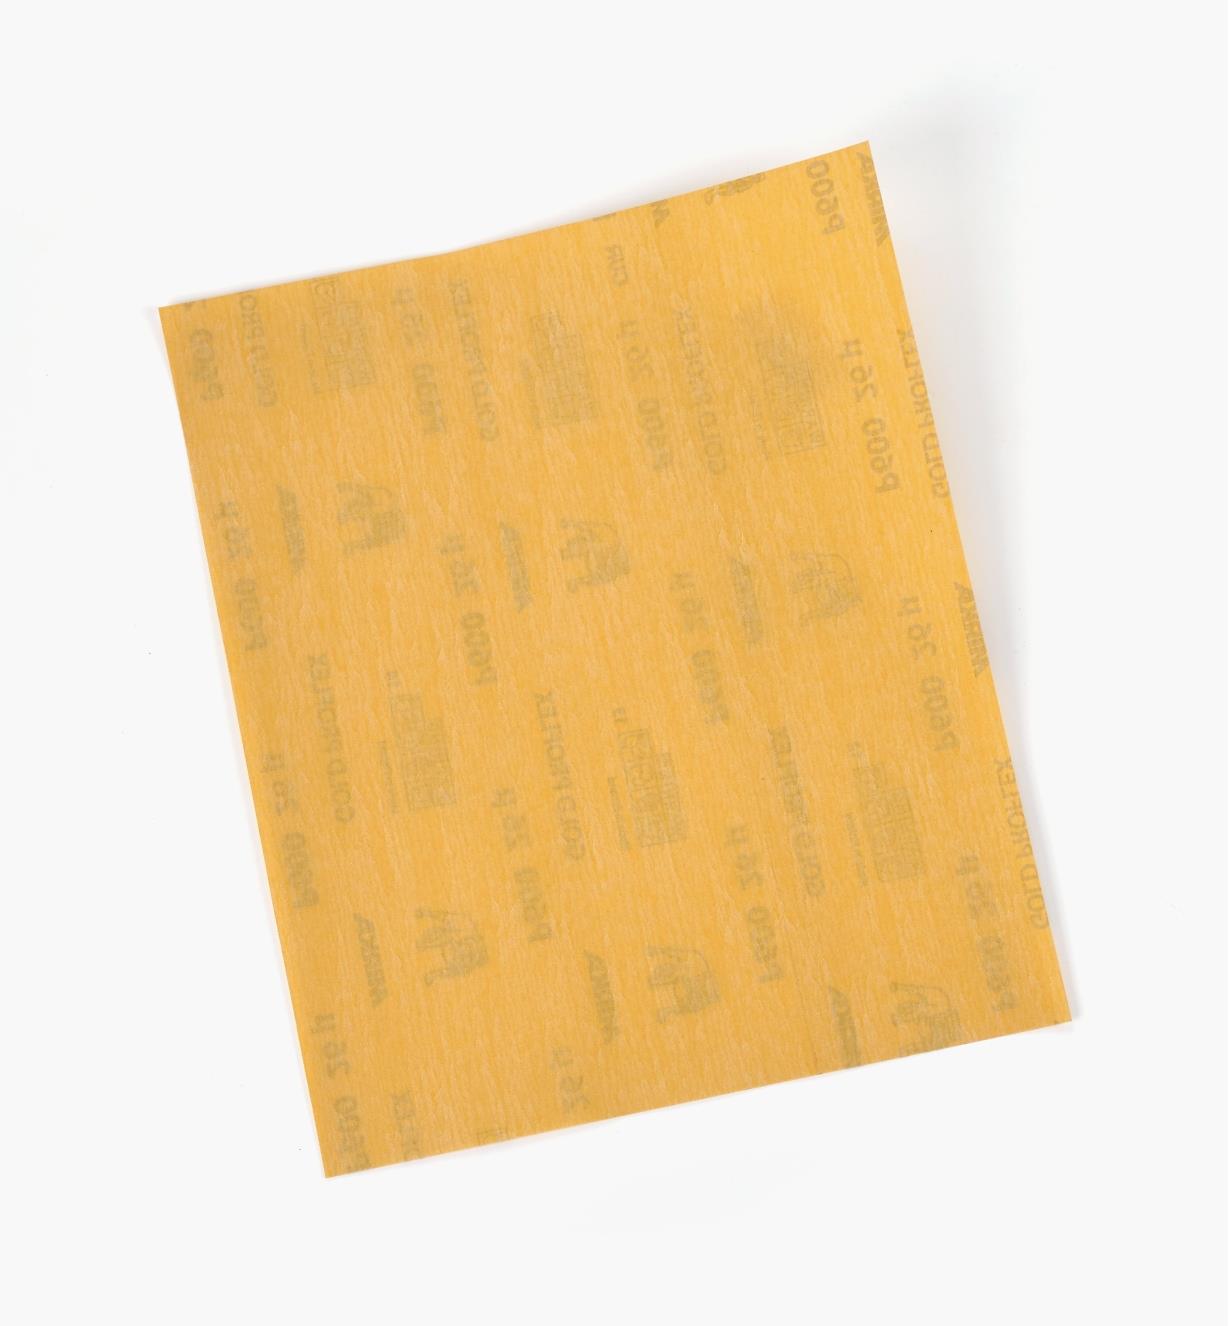 08K0110 - 600x Mirka Gold Sandpaper, each